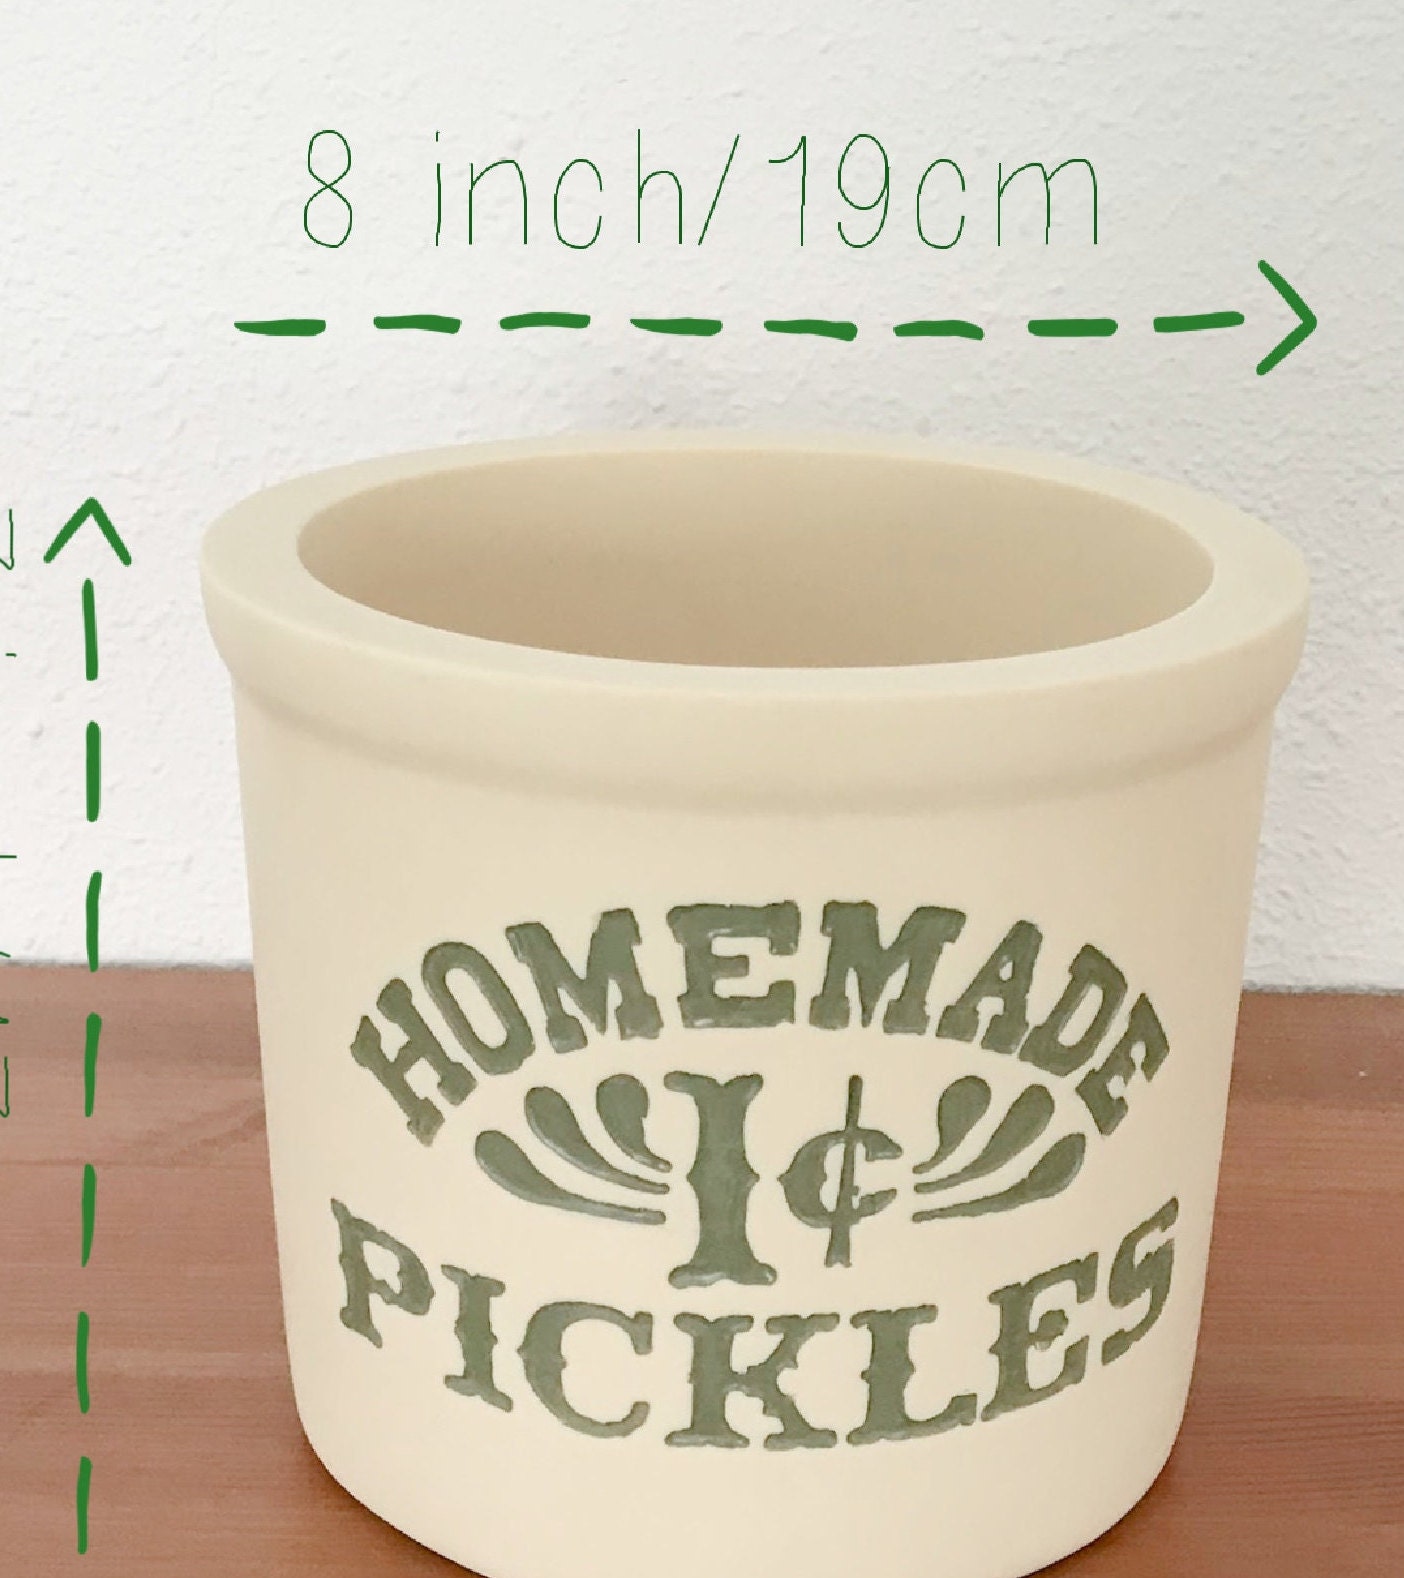 Homemade Pickles image